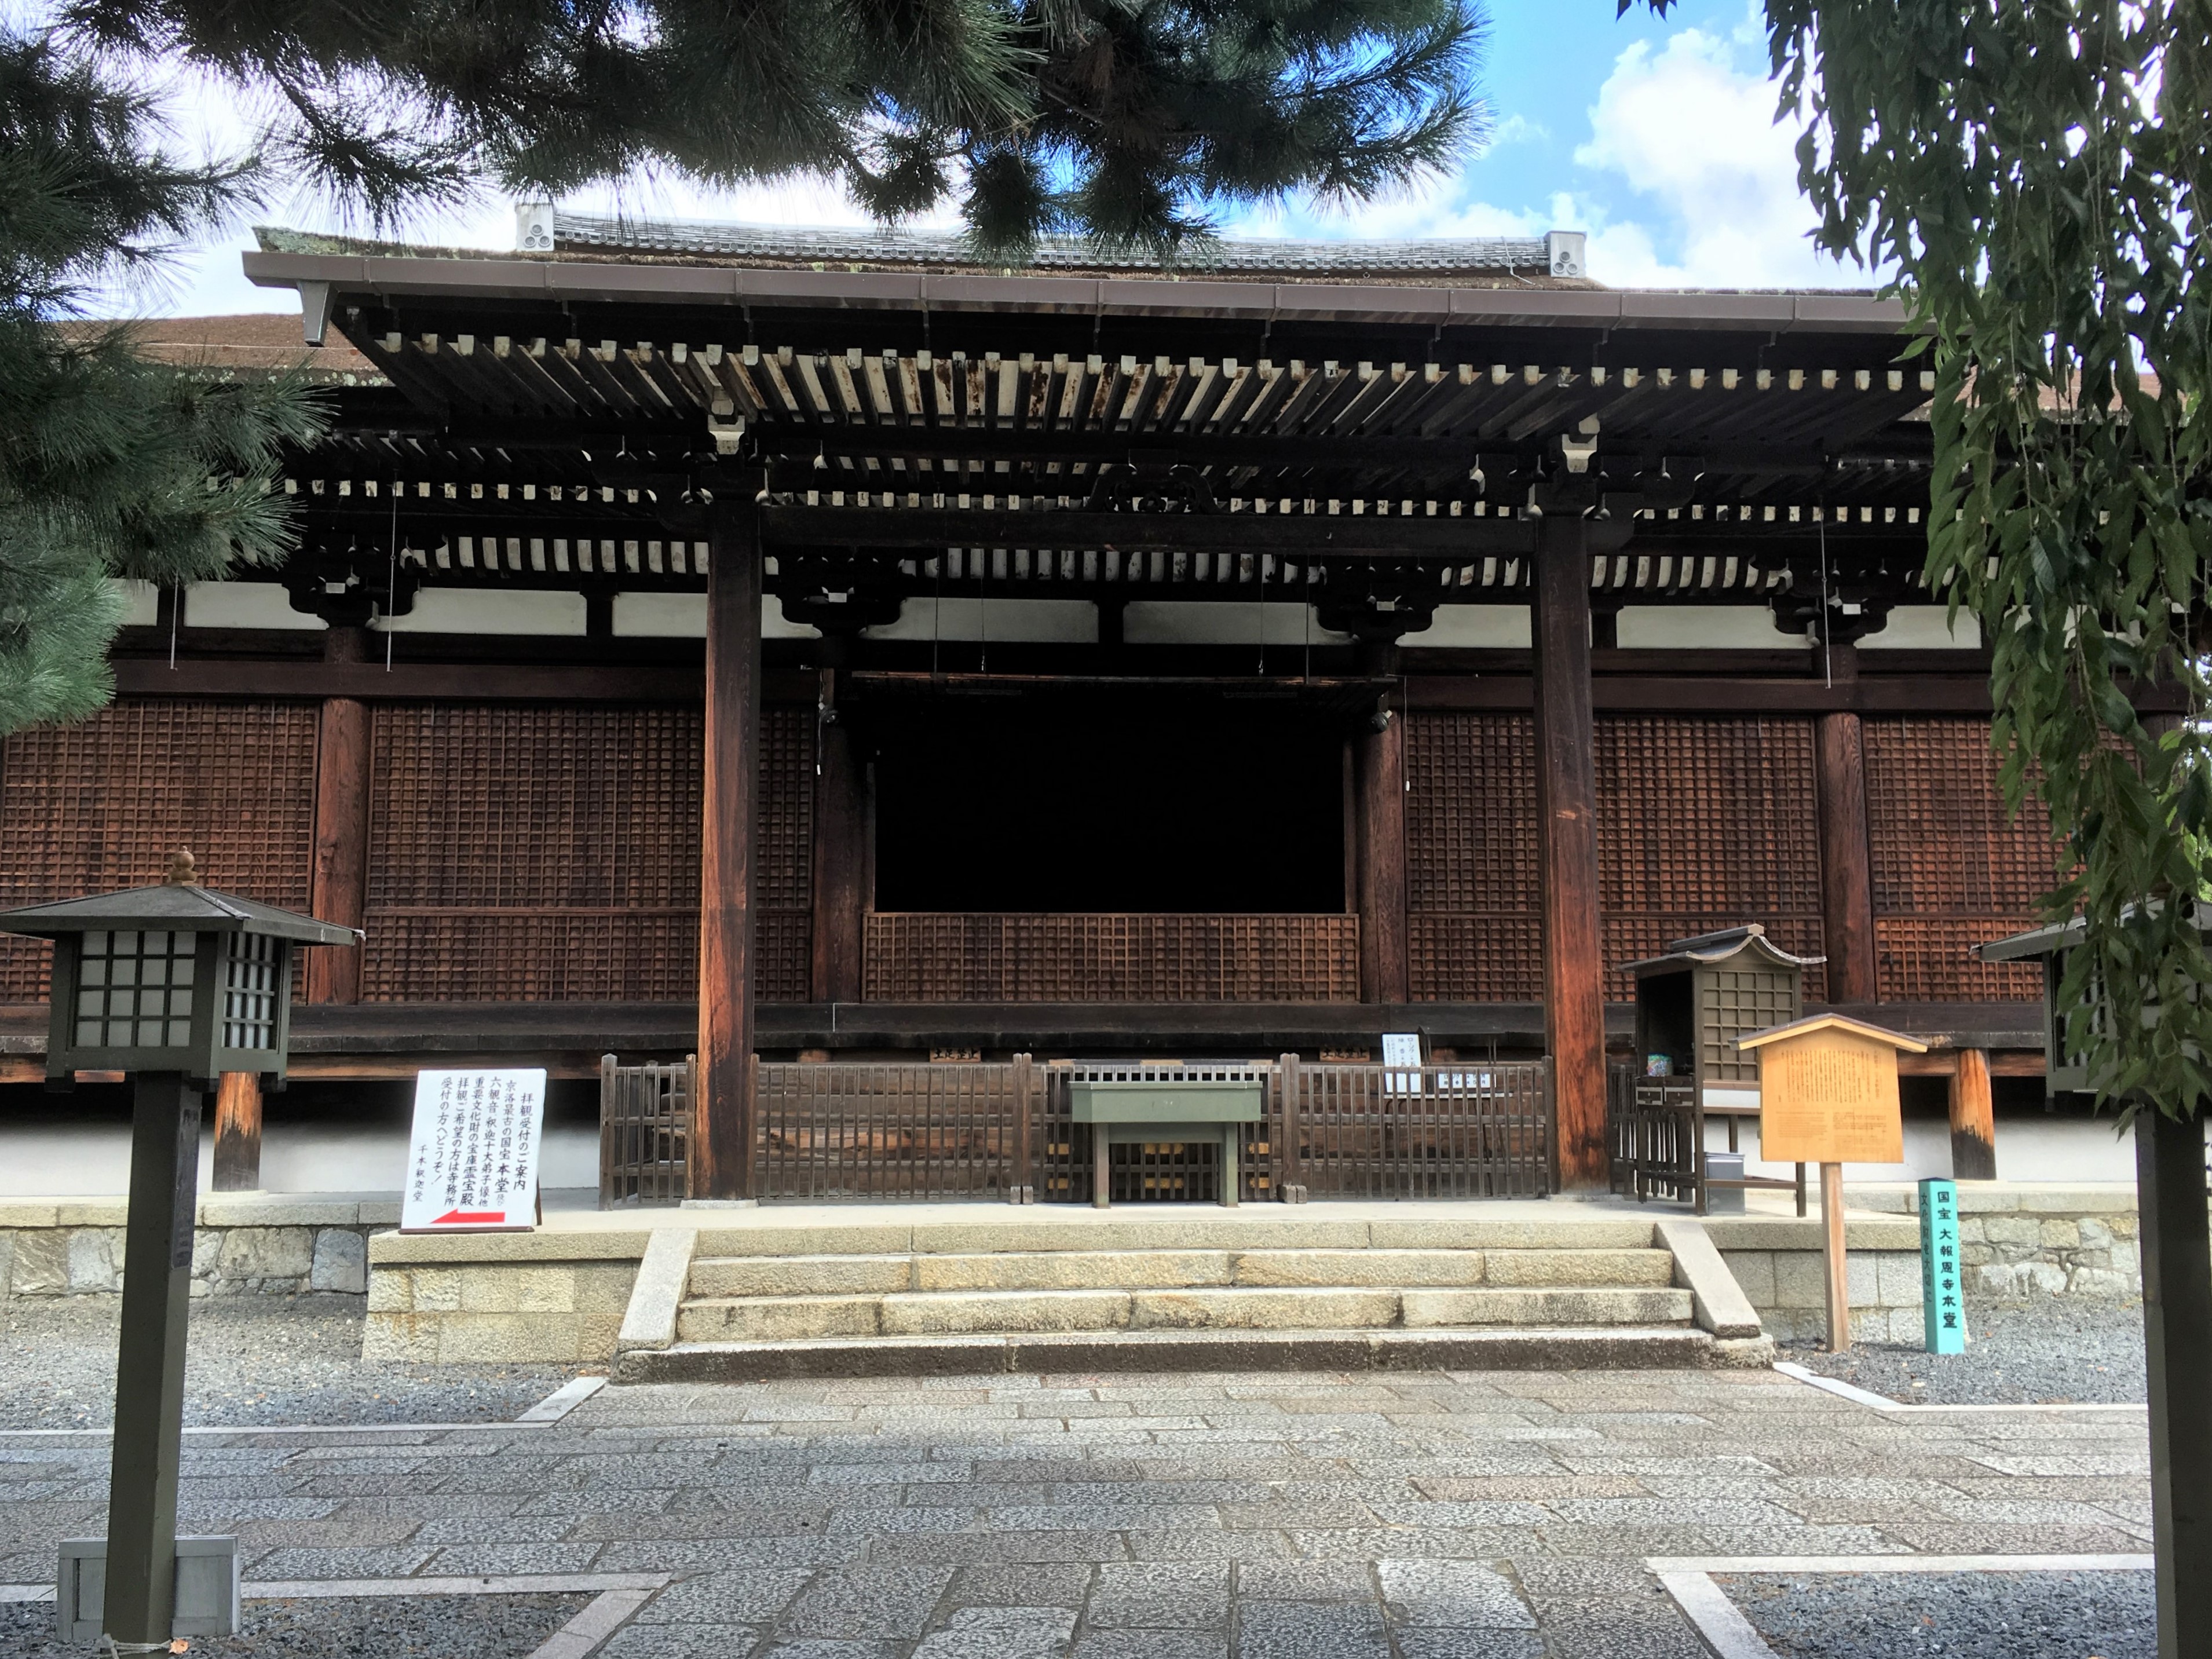 hondo of Senbon Shakado in kyoto Japan, one of the surviving buildings predating the onin war